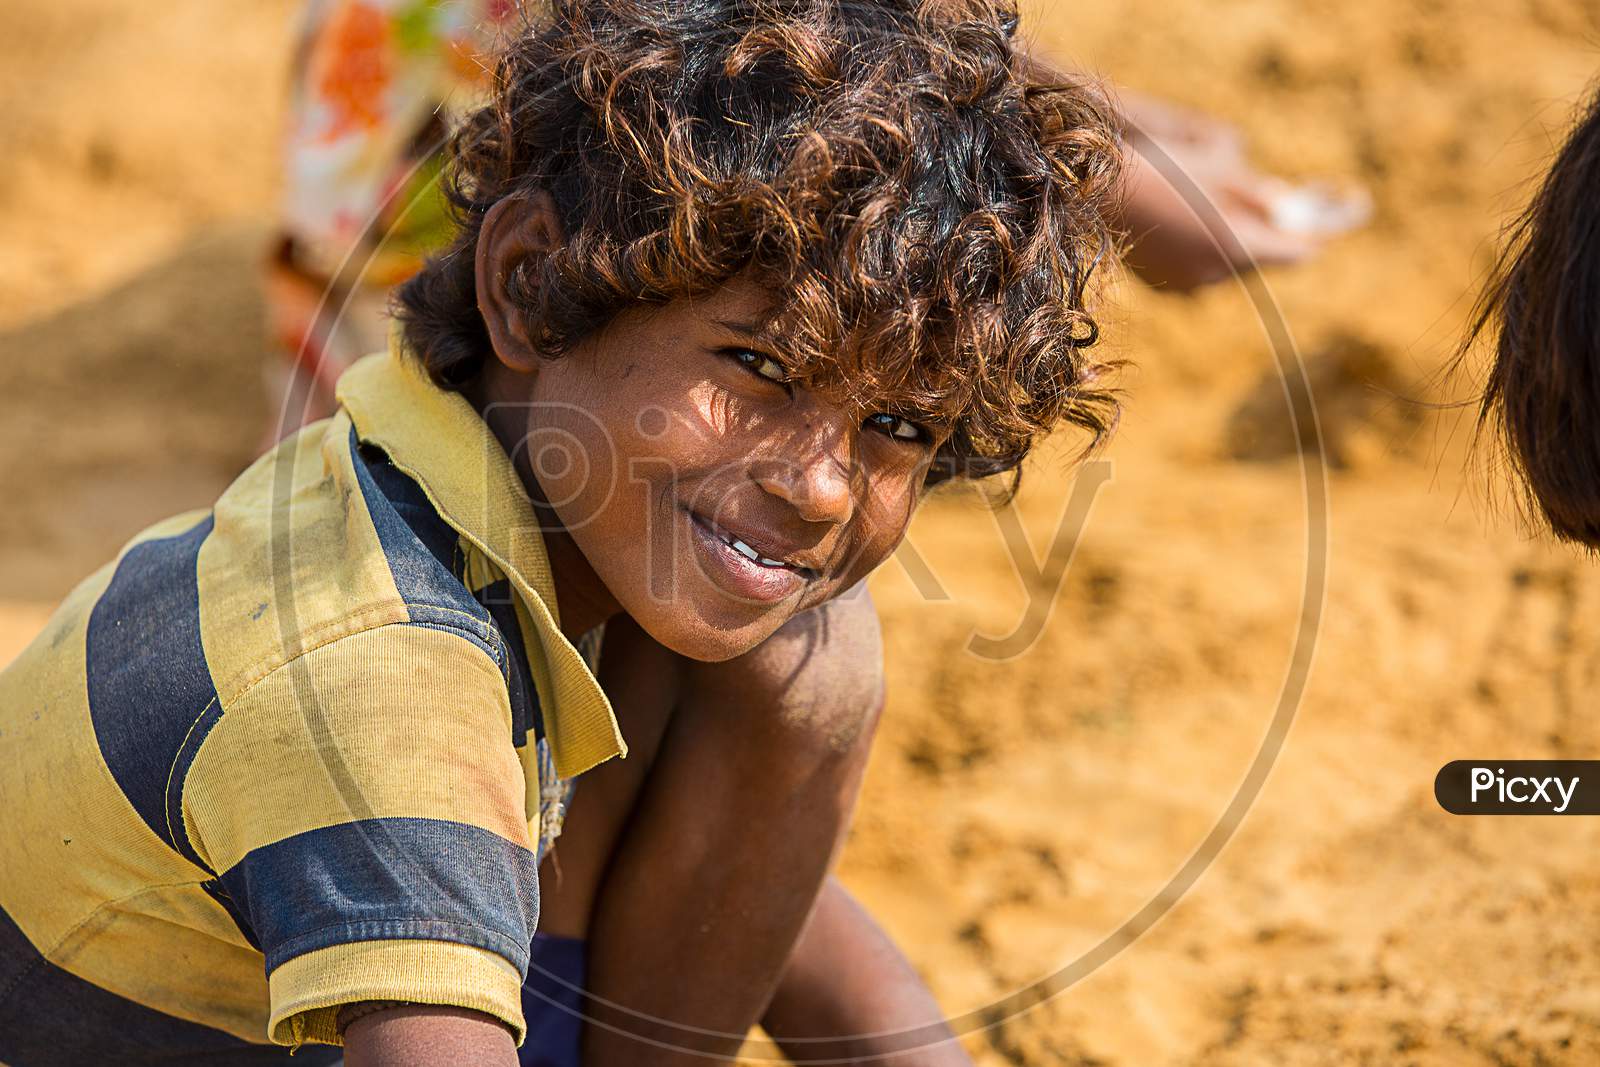 Jodhpur, Rajasthan, India - June 18Th, 2019: Closeup Poor Rural Boy Kid Smiling Towards Camera, Poverty Unprivileged Indian Children.